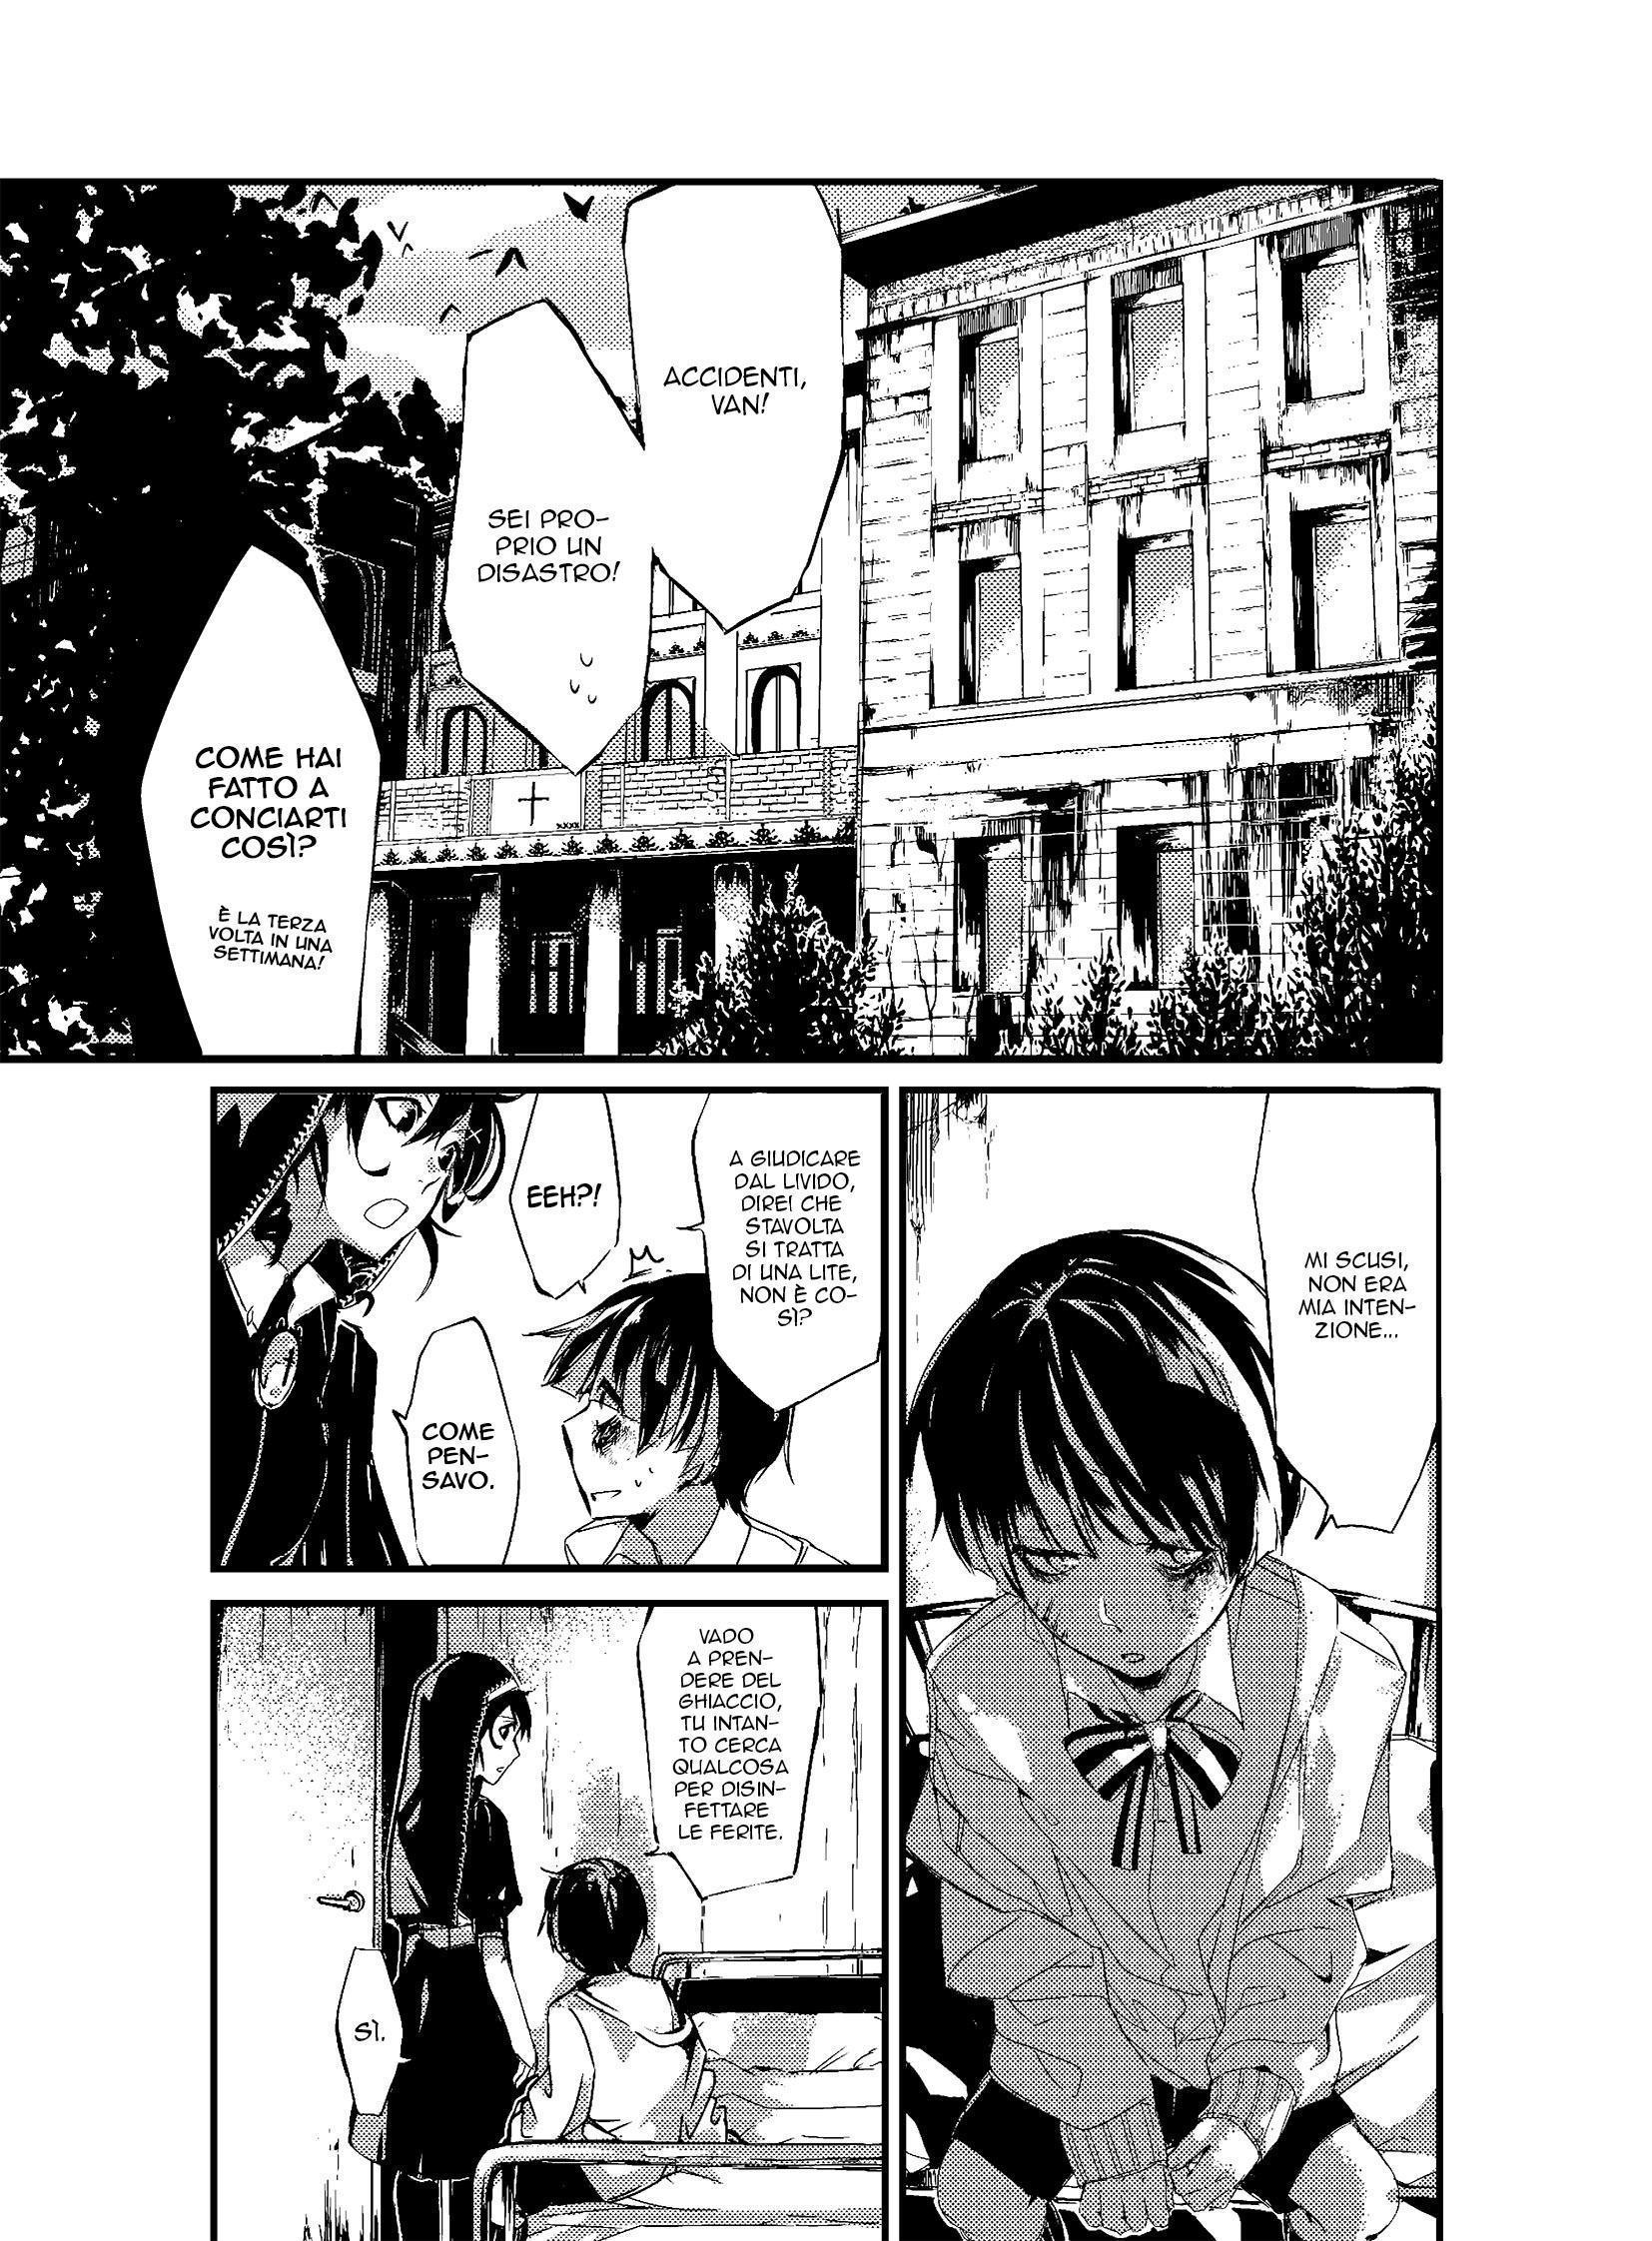 Ace of hearts manga chapter 1